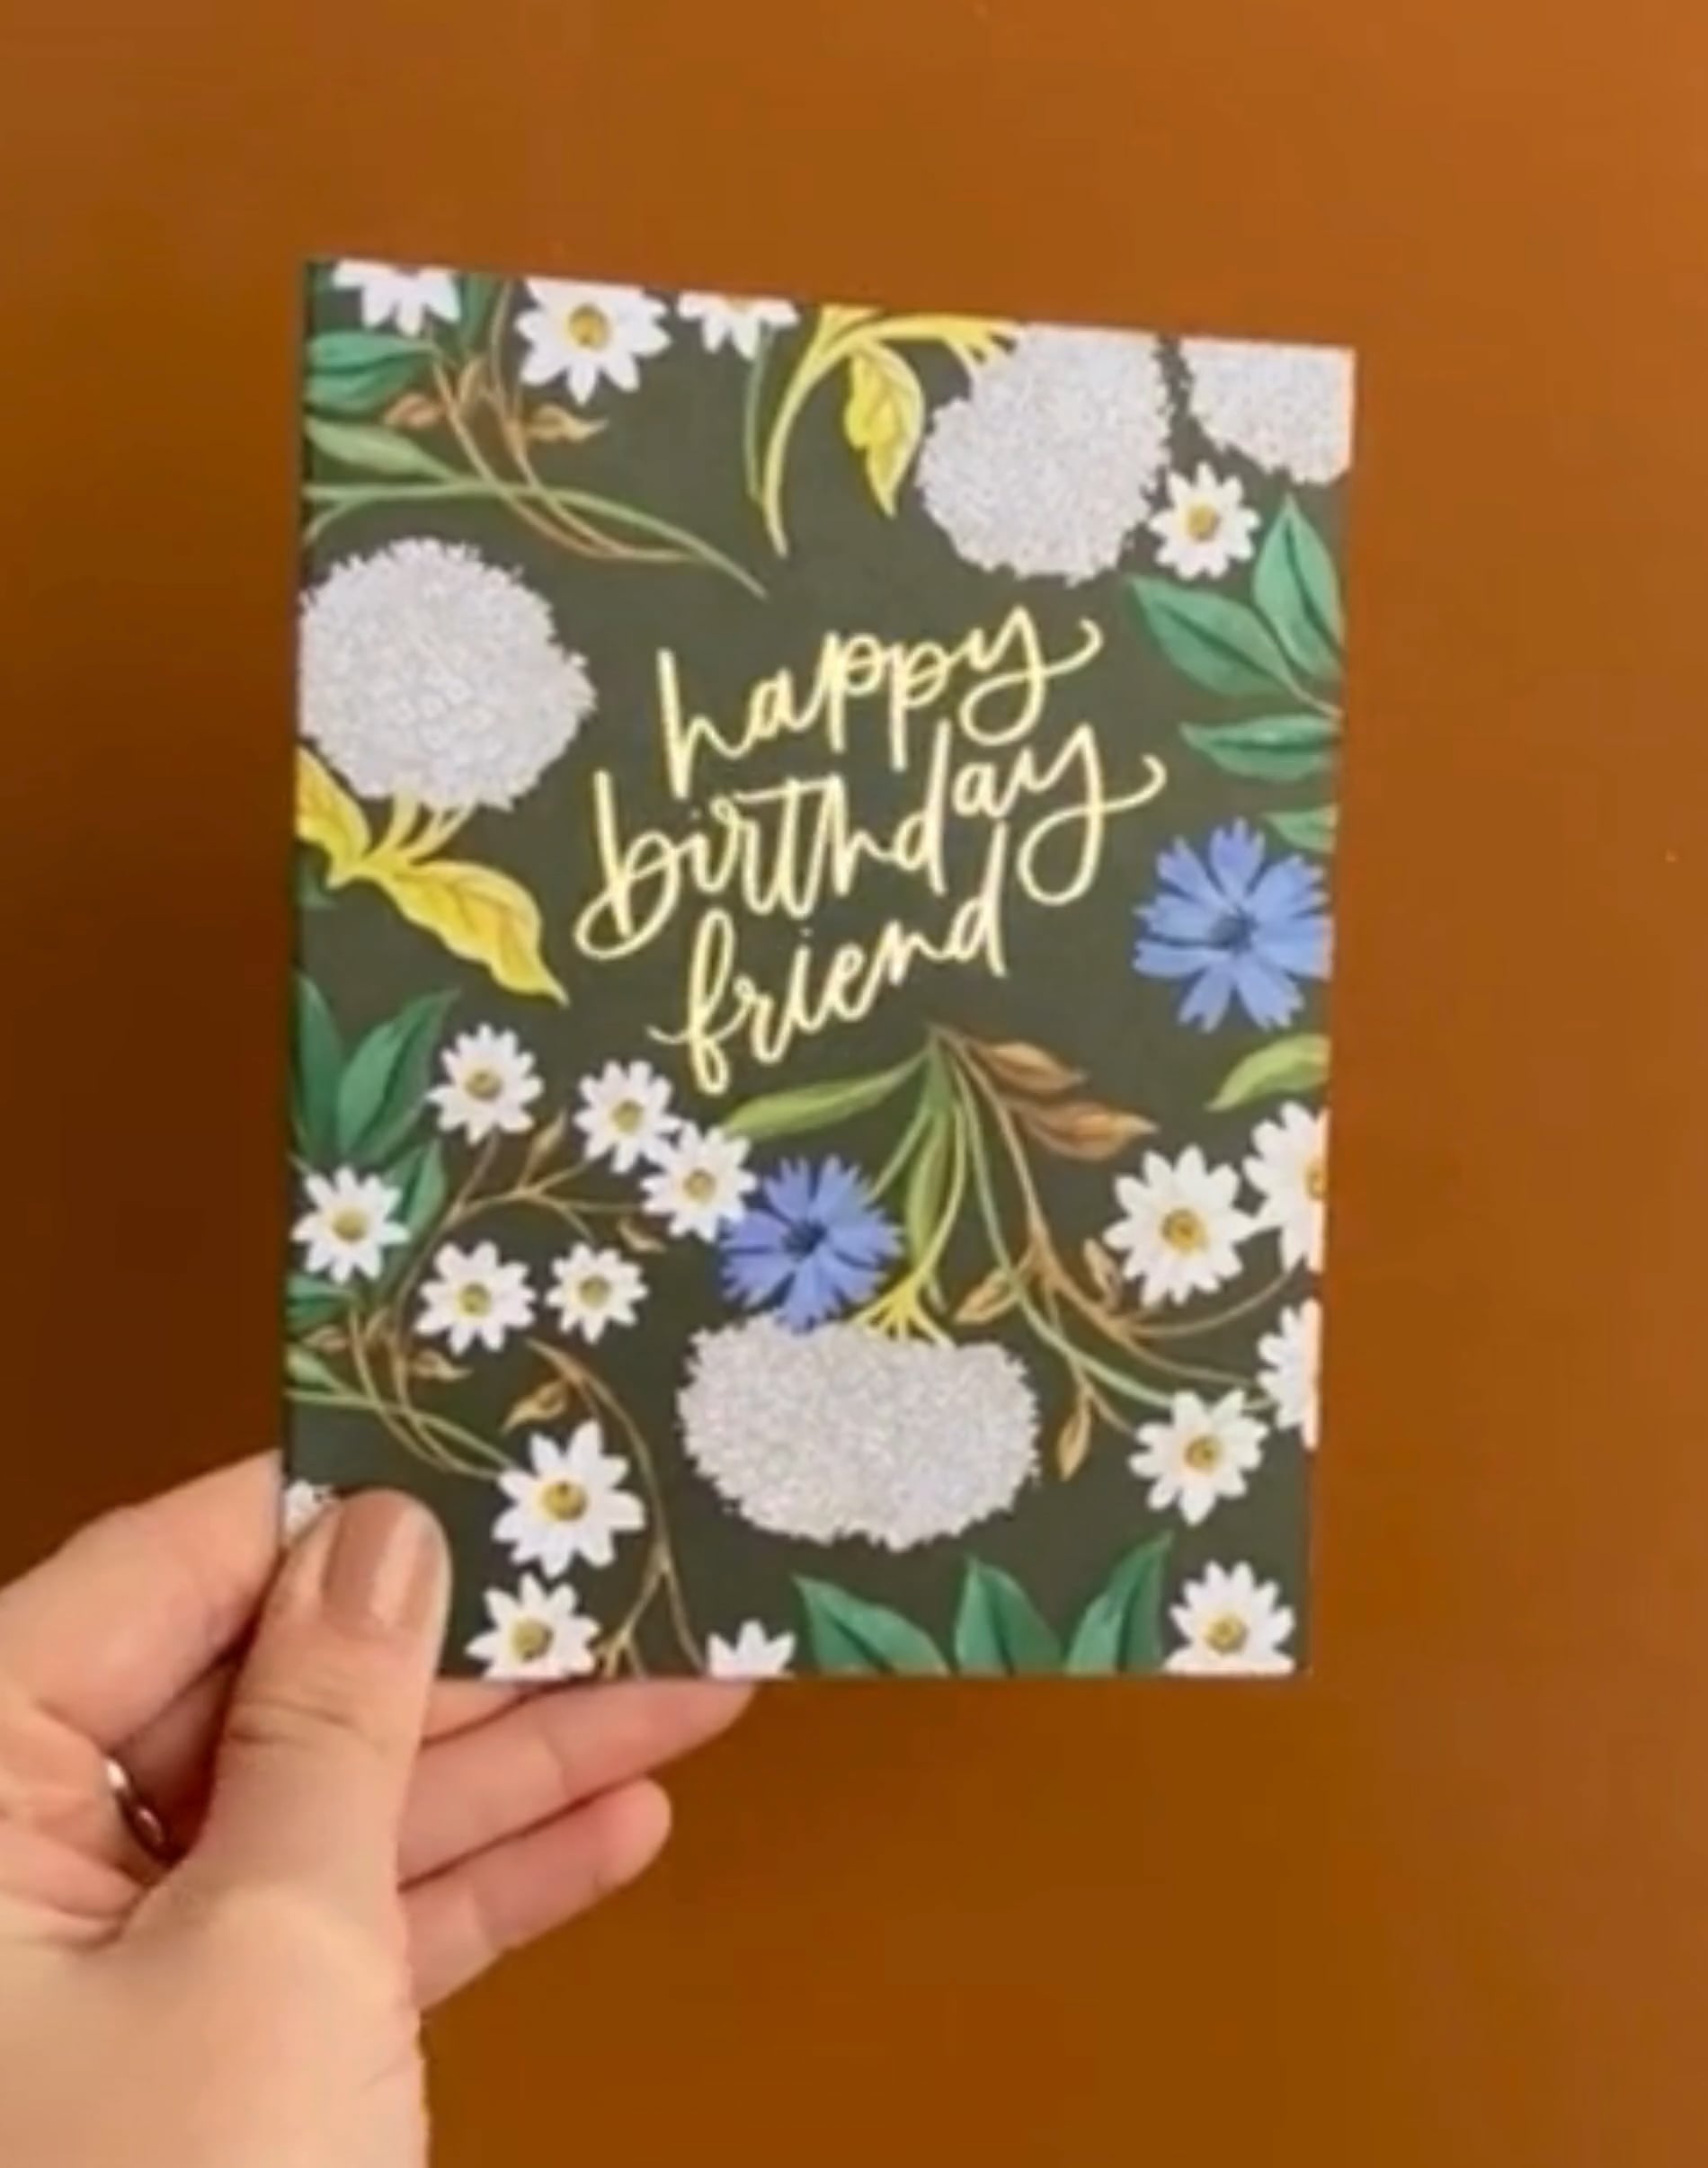 Forage Happy Birthday Greeting Card image